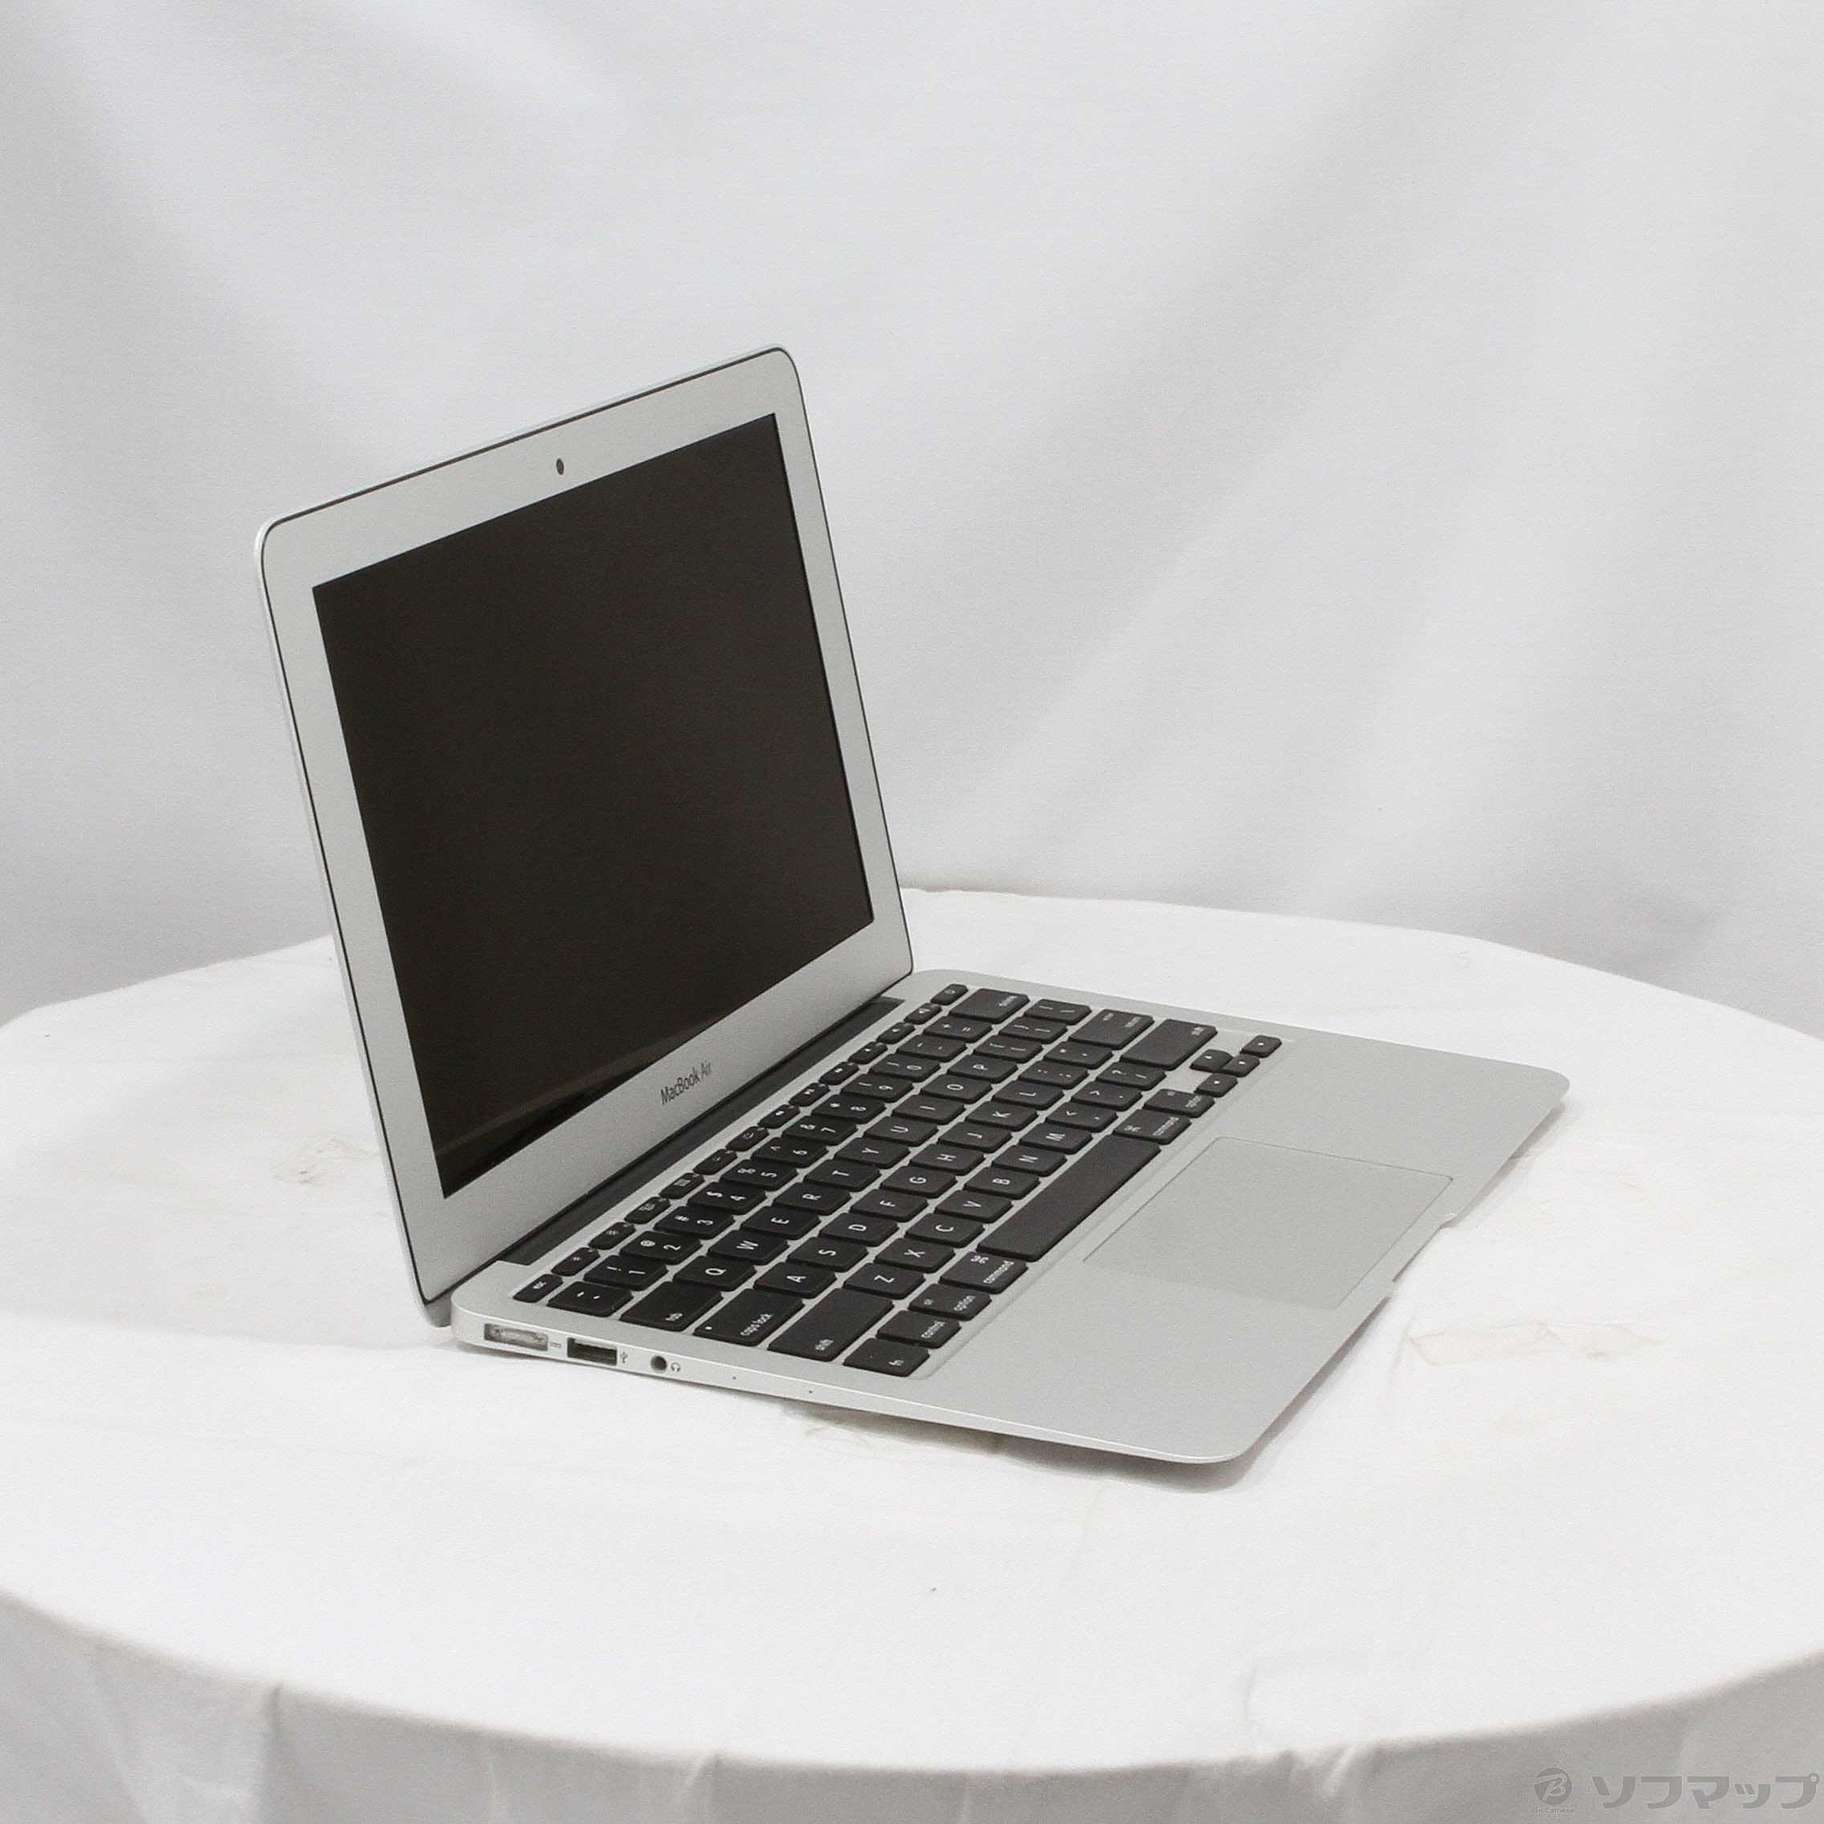 中古品〕 MacBook Air 11.6-inch Mid 2013 MD712J／A Core_i7 1.7GHz 